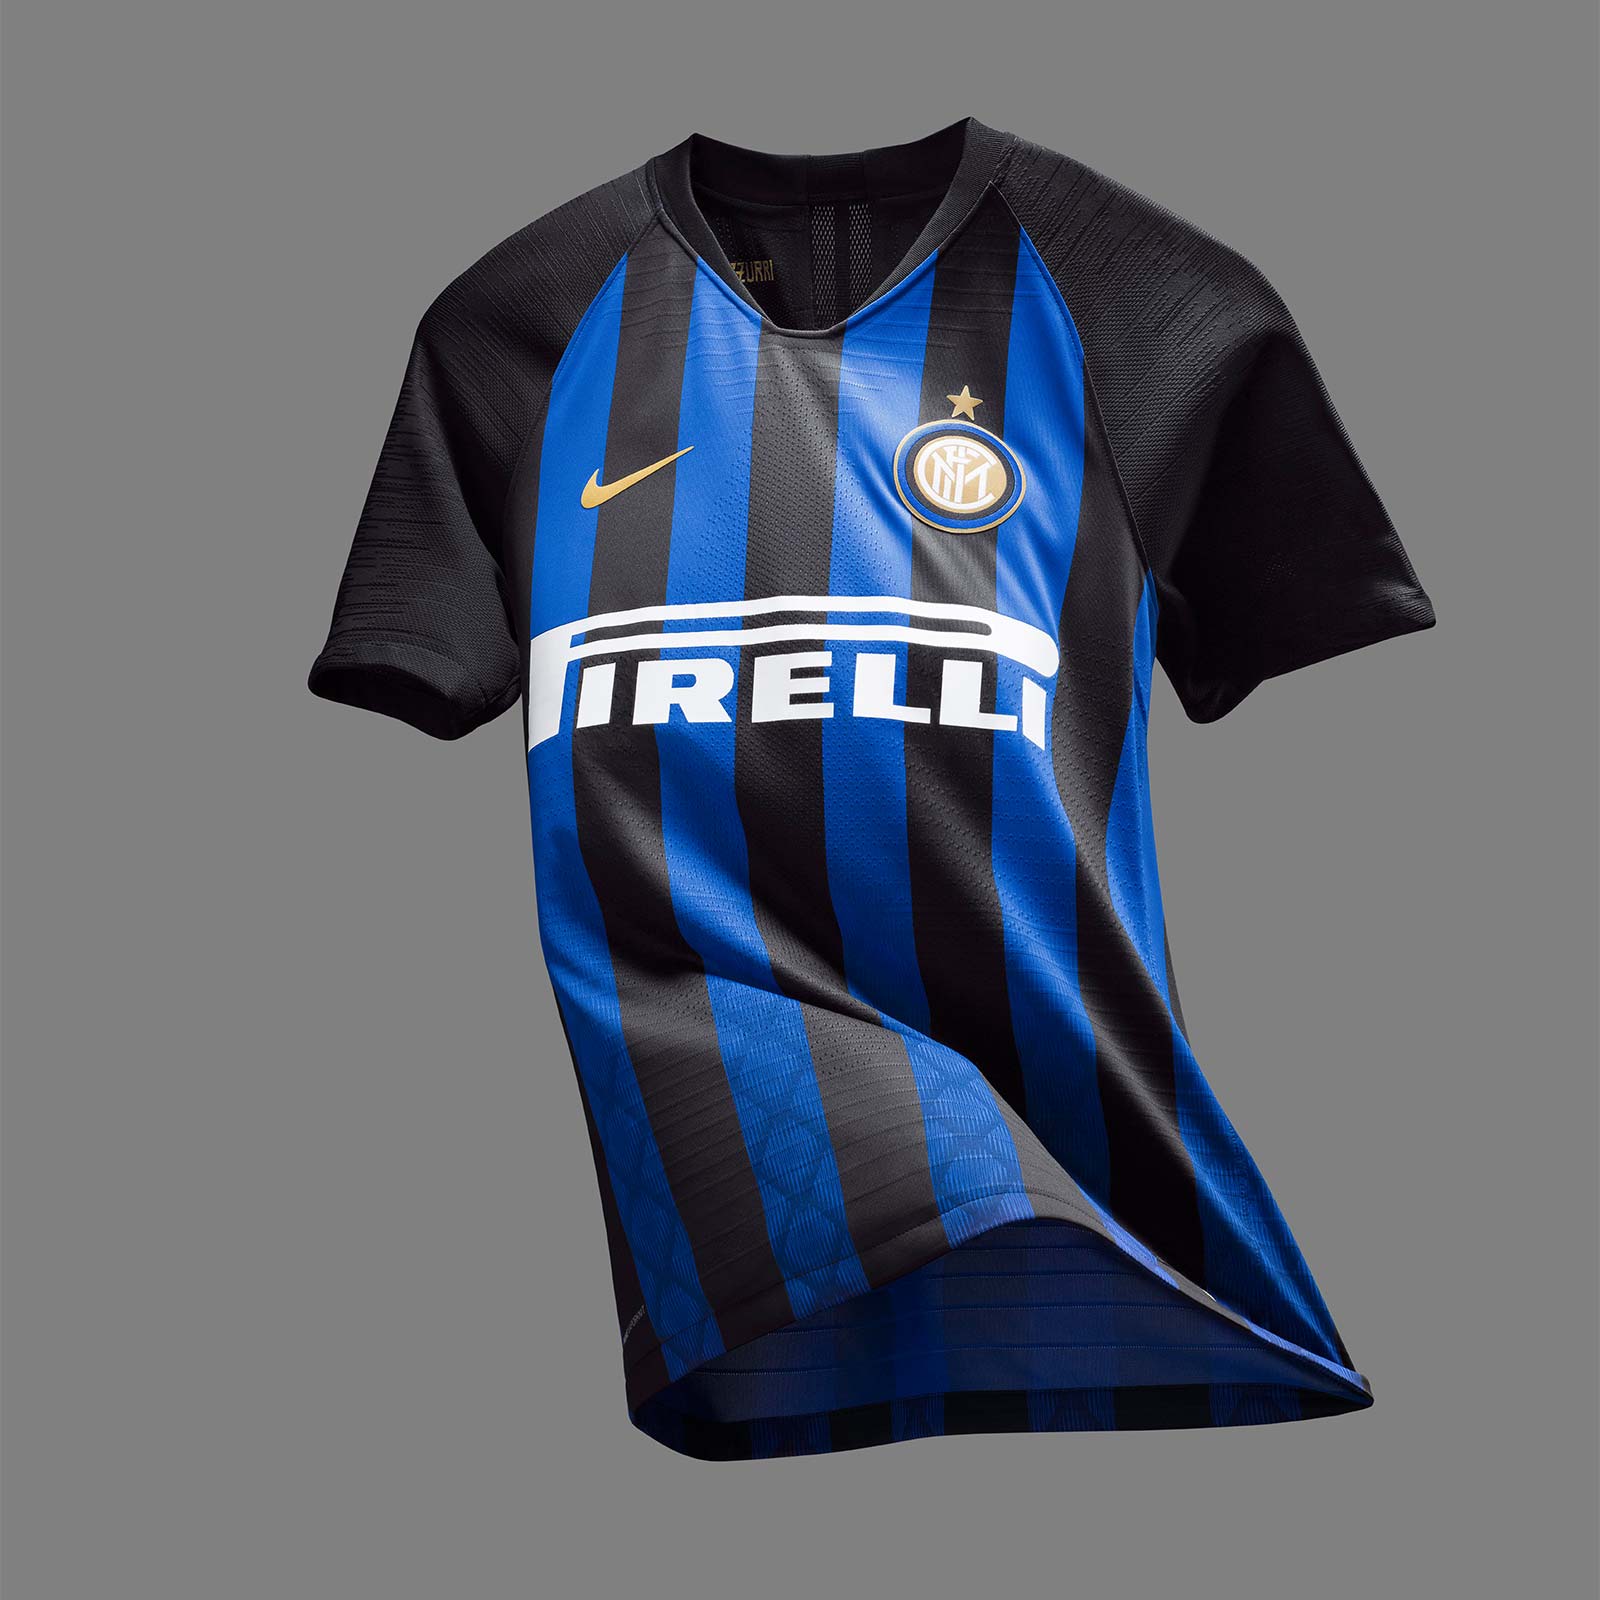 Nike Inter 18-19 Home Kit Released - Footy Headlines